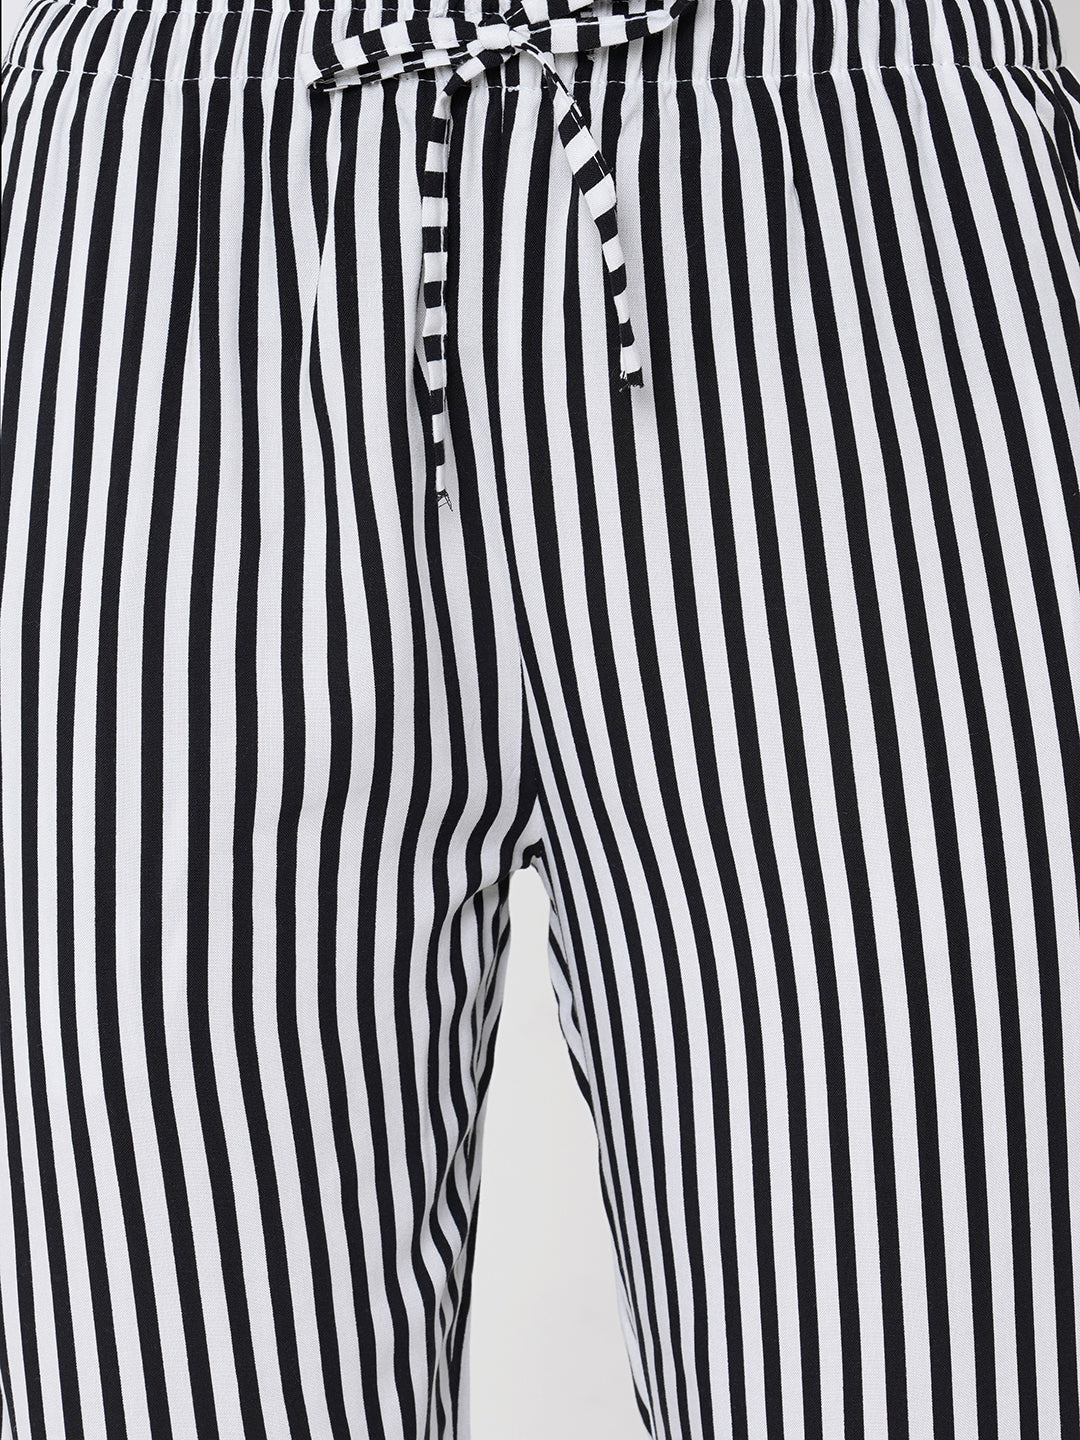 Women's Striped, Black, Viscose, Regular Fit, Elasticated, Waistband, Pyjama  With Side Pockets